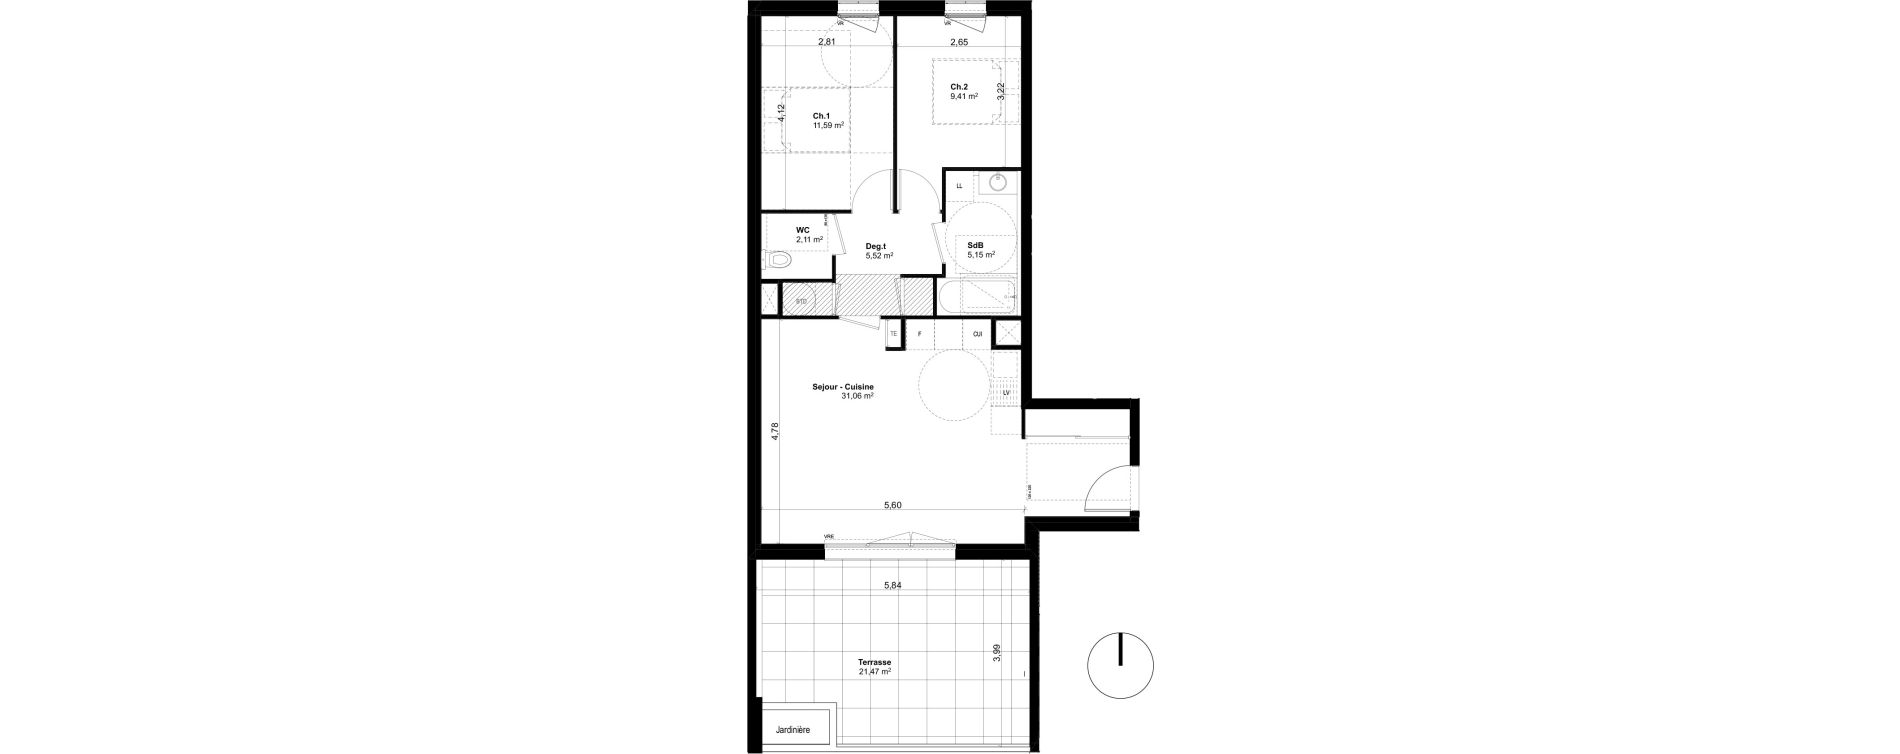 Appartement T3 de 64,84 m2 &agrave; Ventabren L heritiere